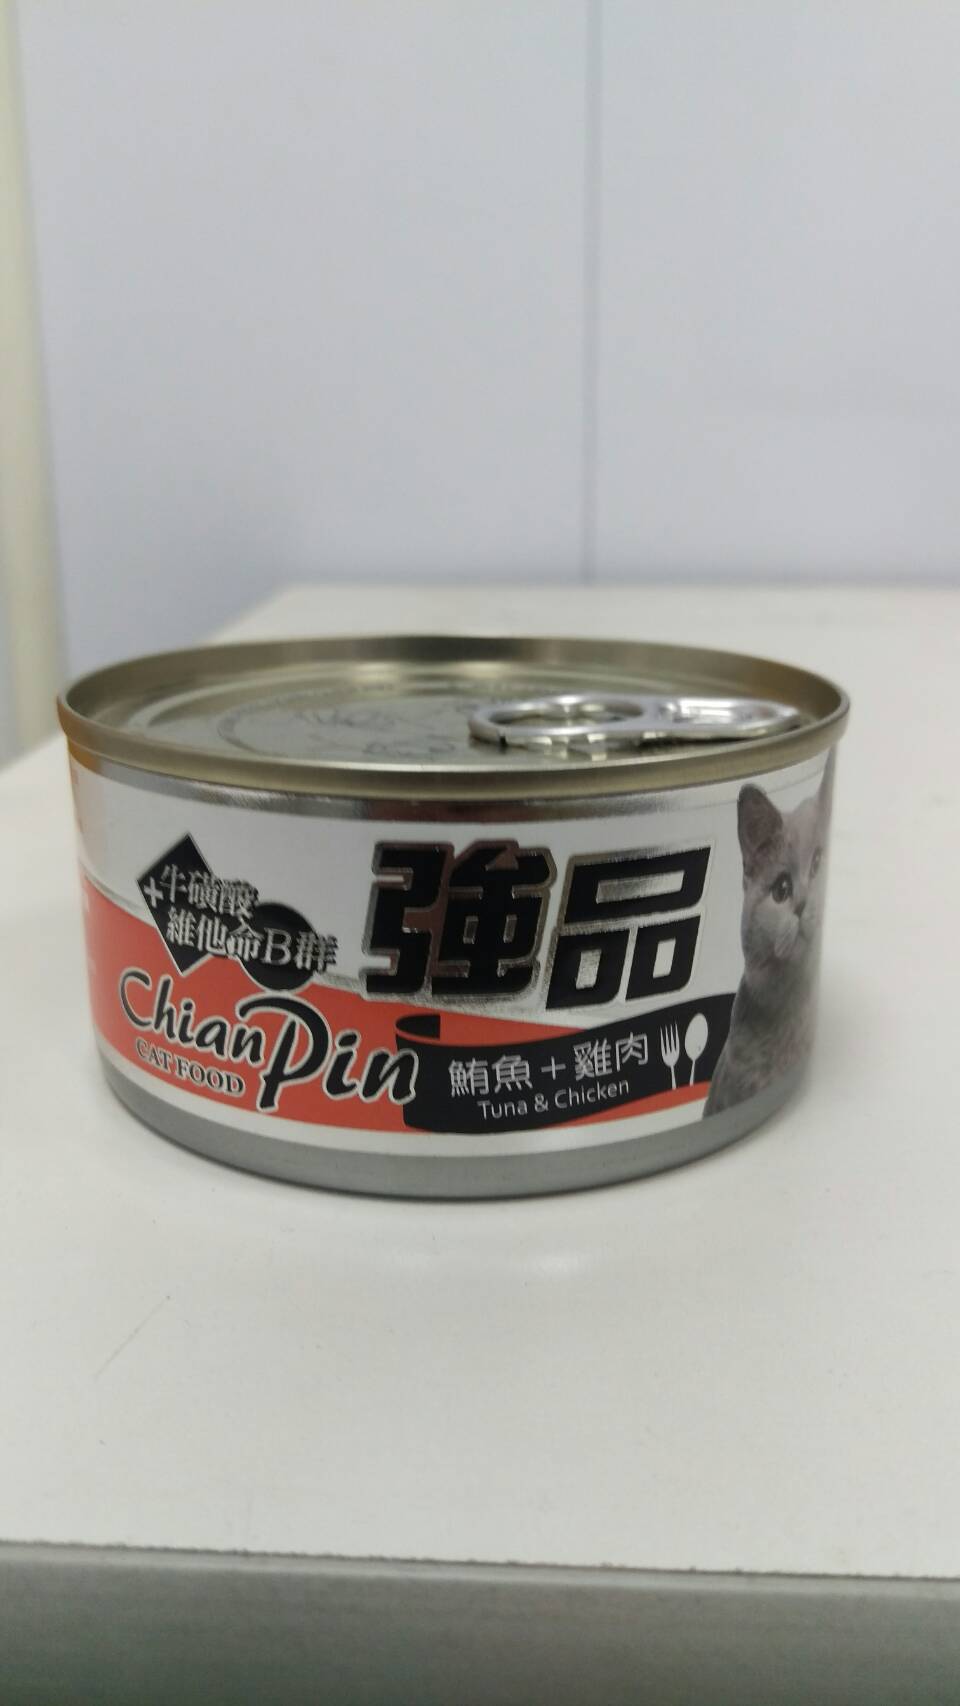 強品貓罐-鮪魚+雞肉
Chian Pin cat can- tuna+chicken